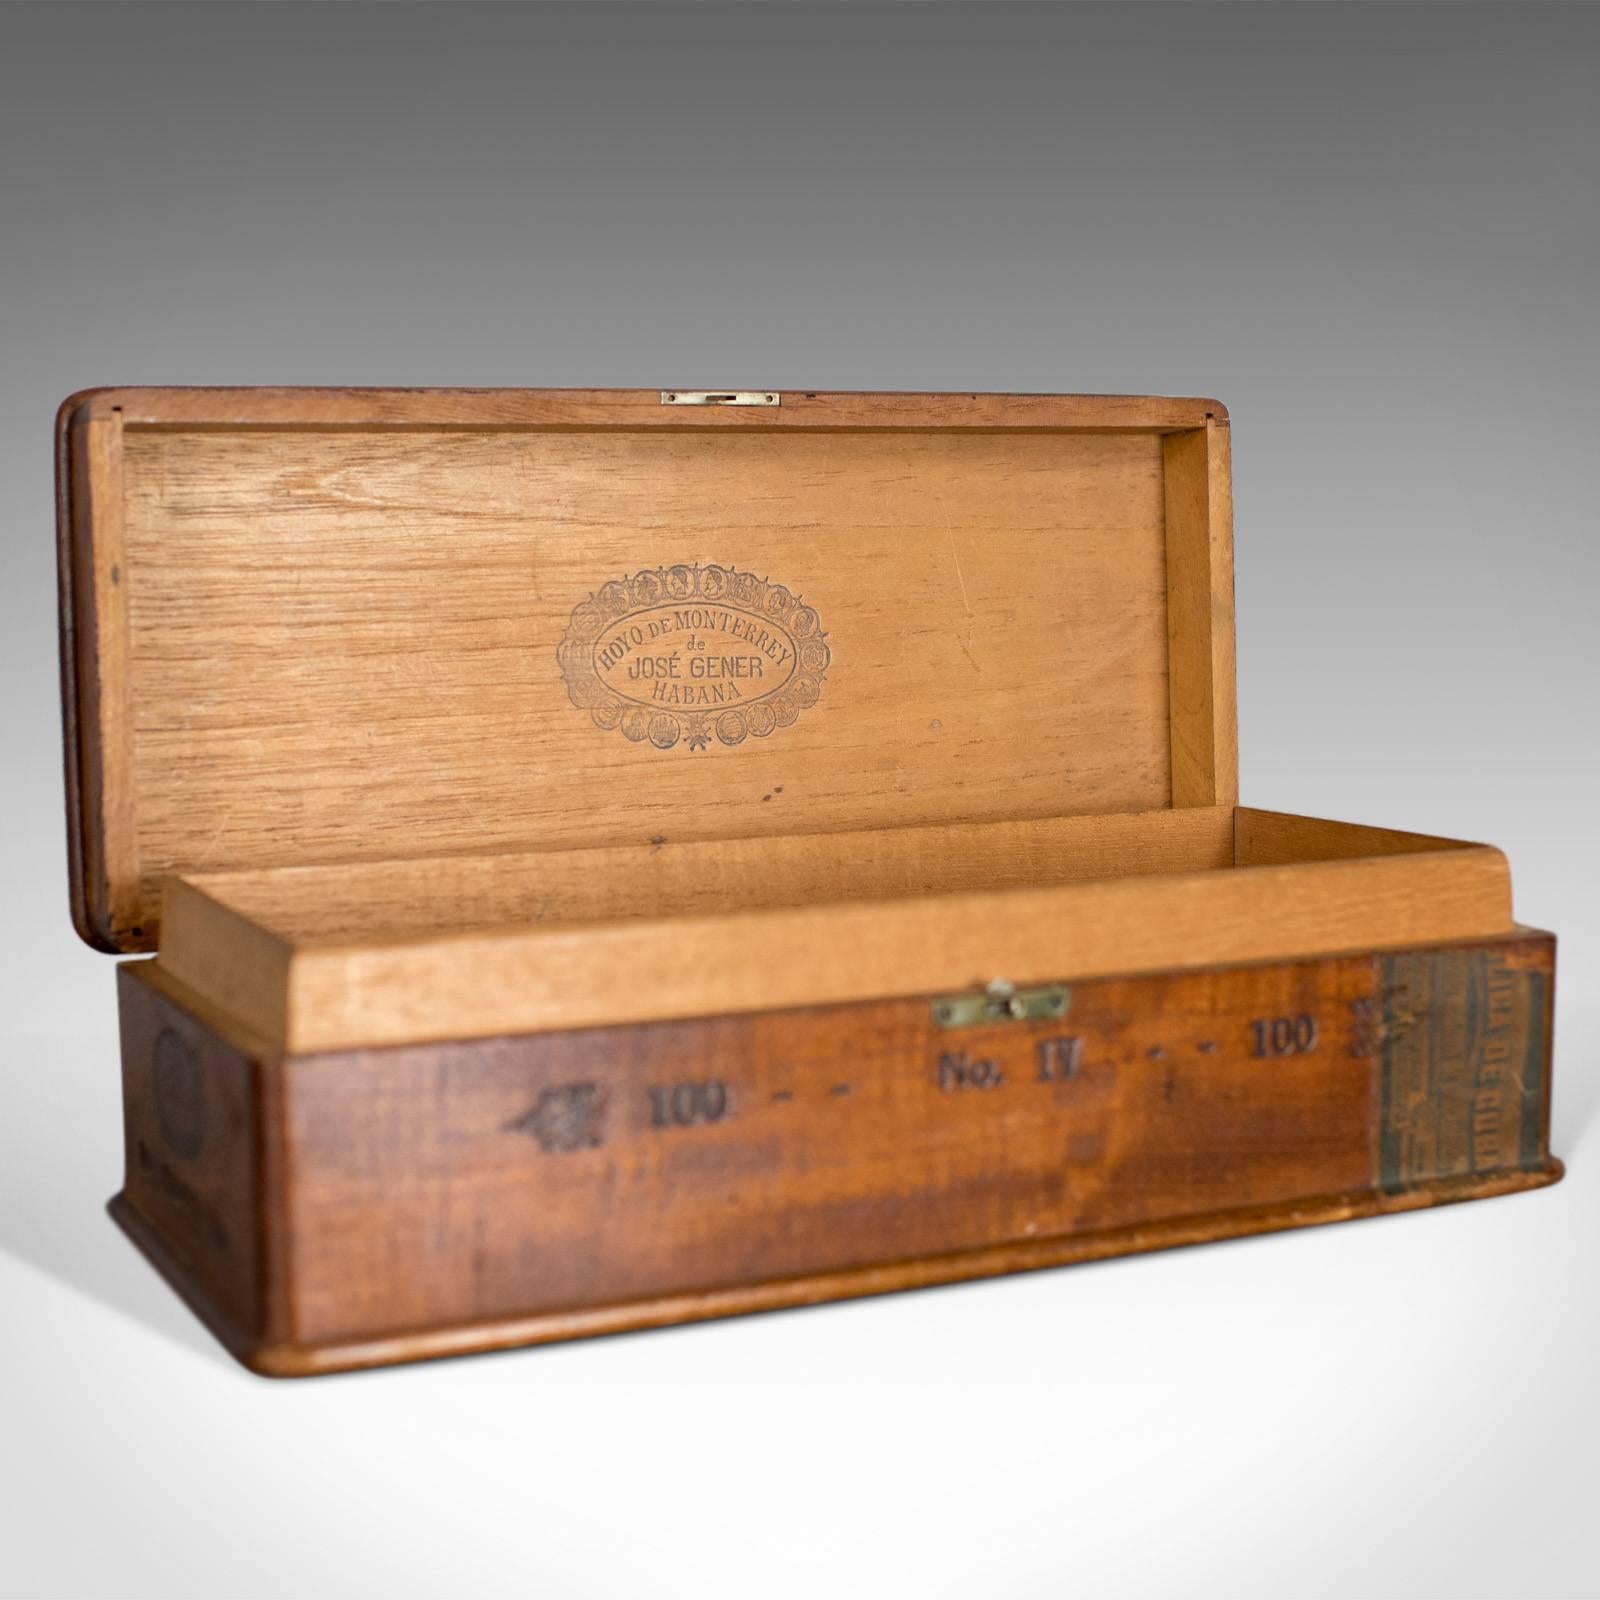 Edwardian Antique Wooden Cigar Box, Hoyo De Monterrey, Havana, Habana, Humidor, circa 1920